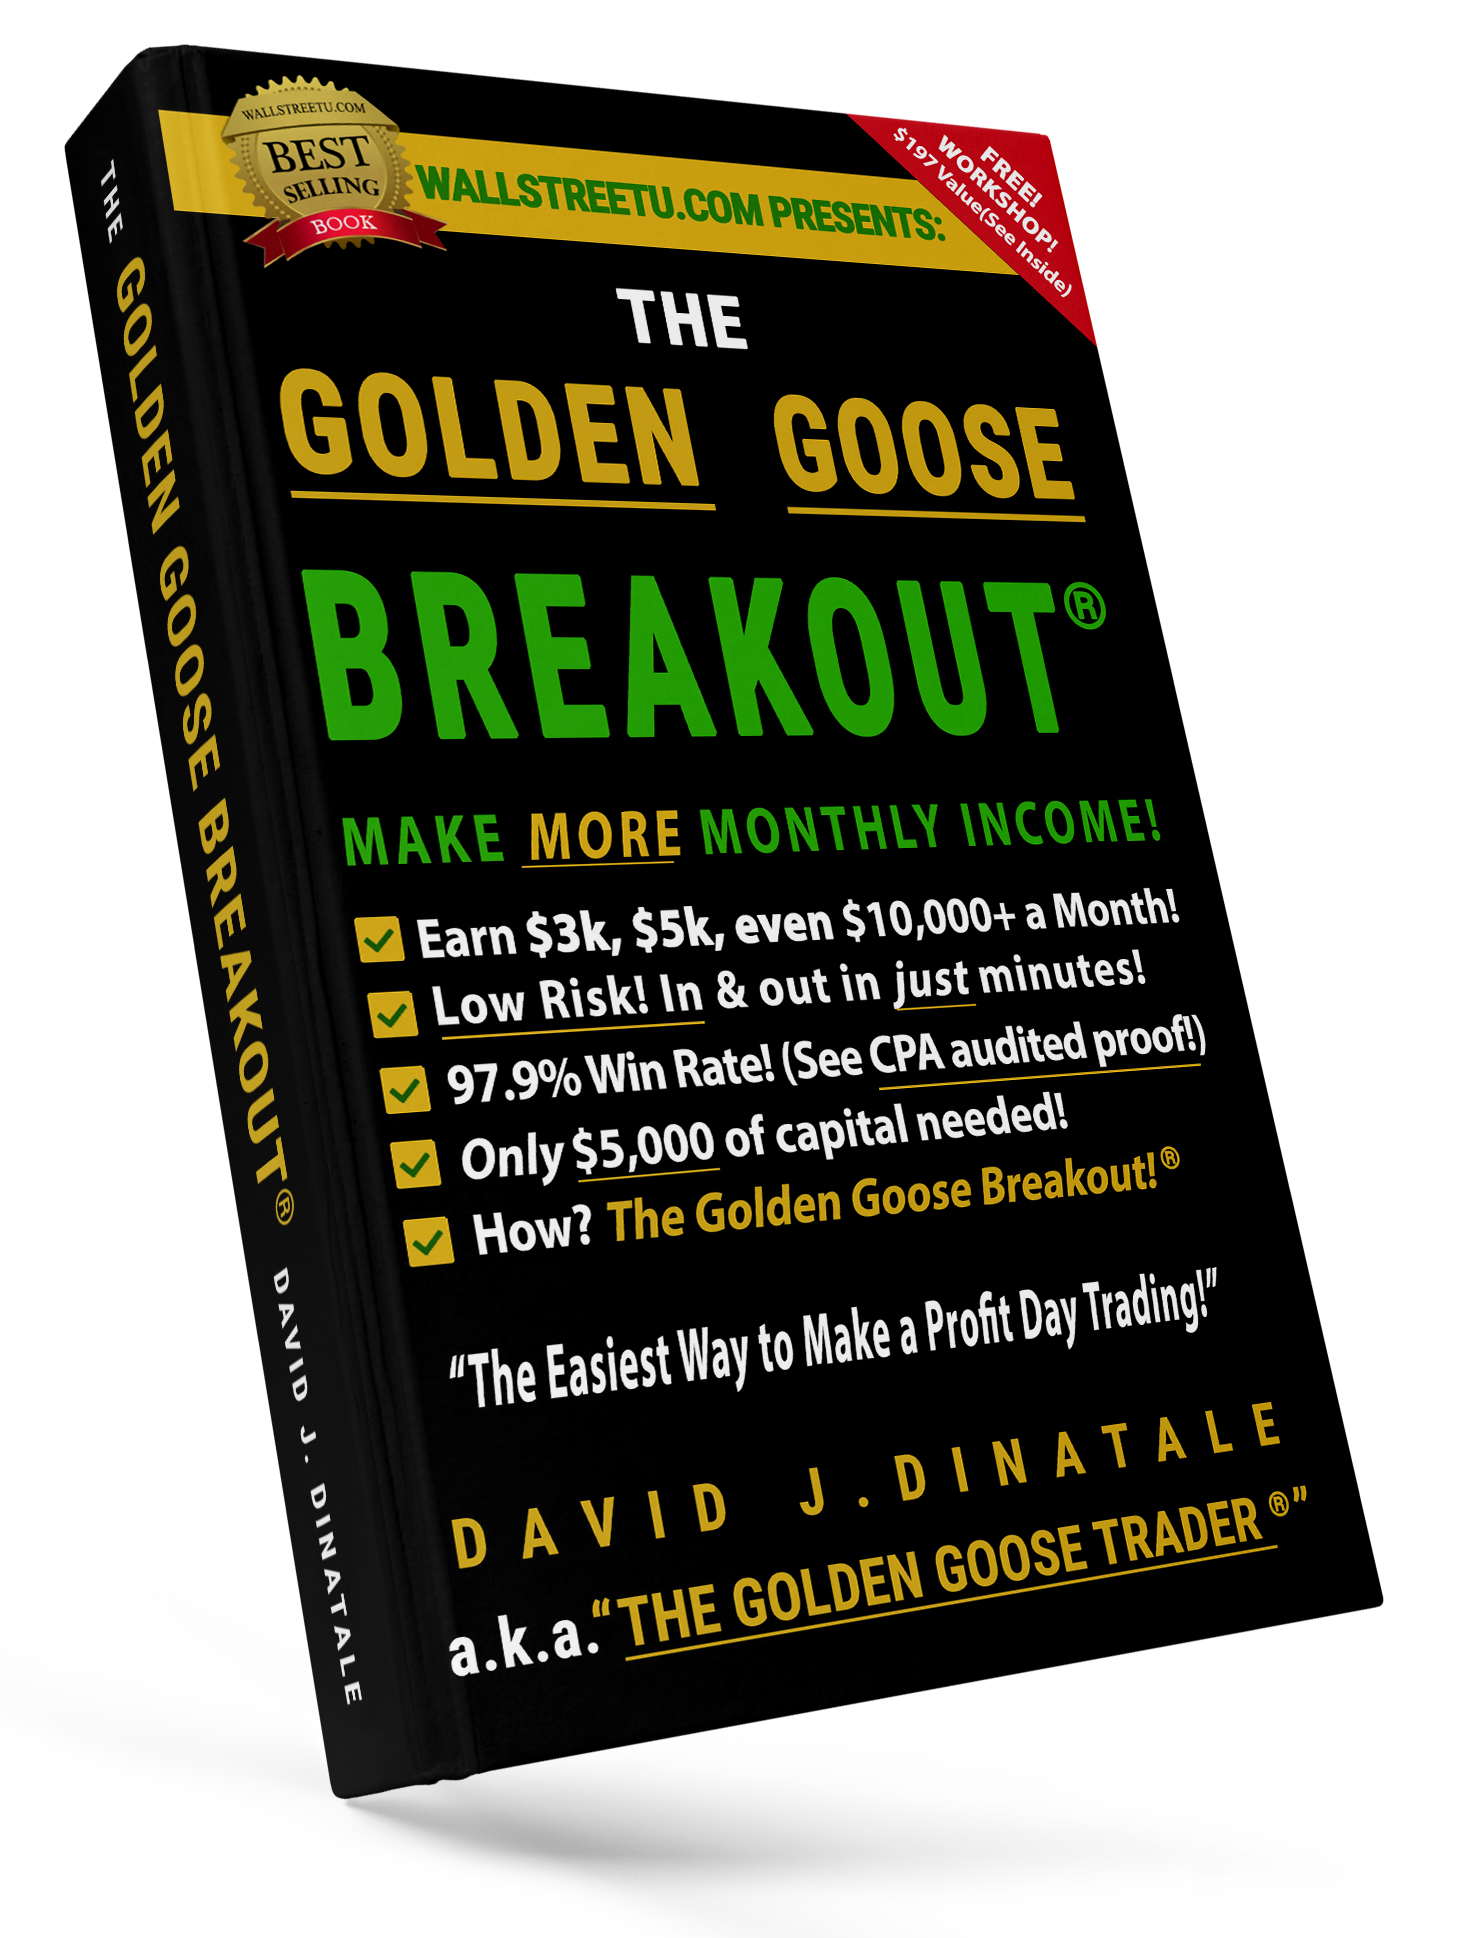 The Golden Goose Breakout